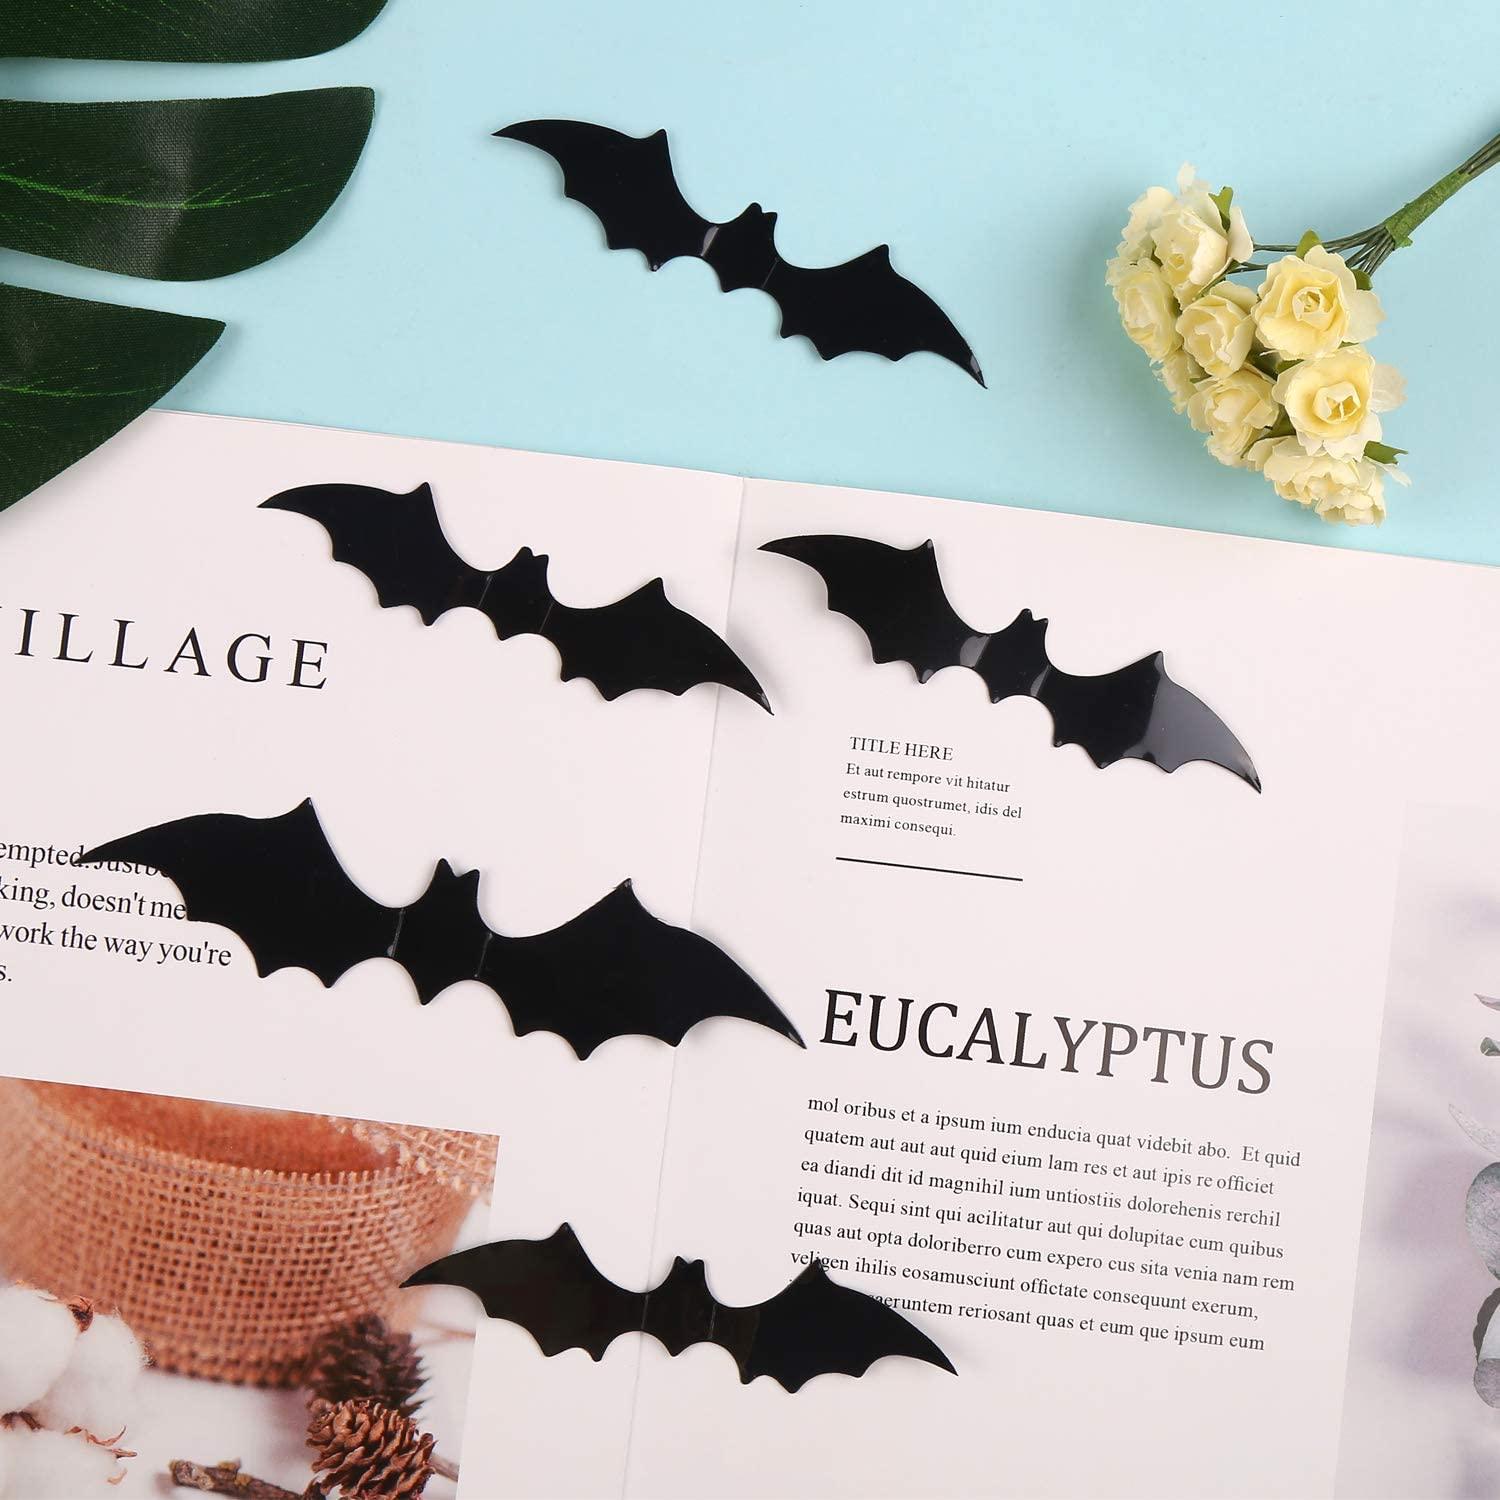 Bats Wall Decor,120 Pcs 3D Bat Halloween Decoration Stickers for Home Decor 4 Size Waterproof Black Spooky Bats - Lasercutwraps Shop